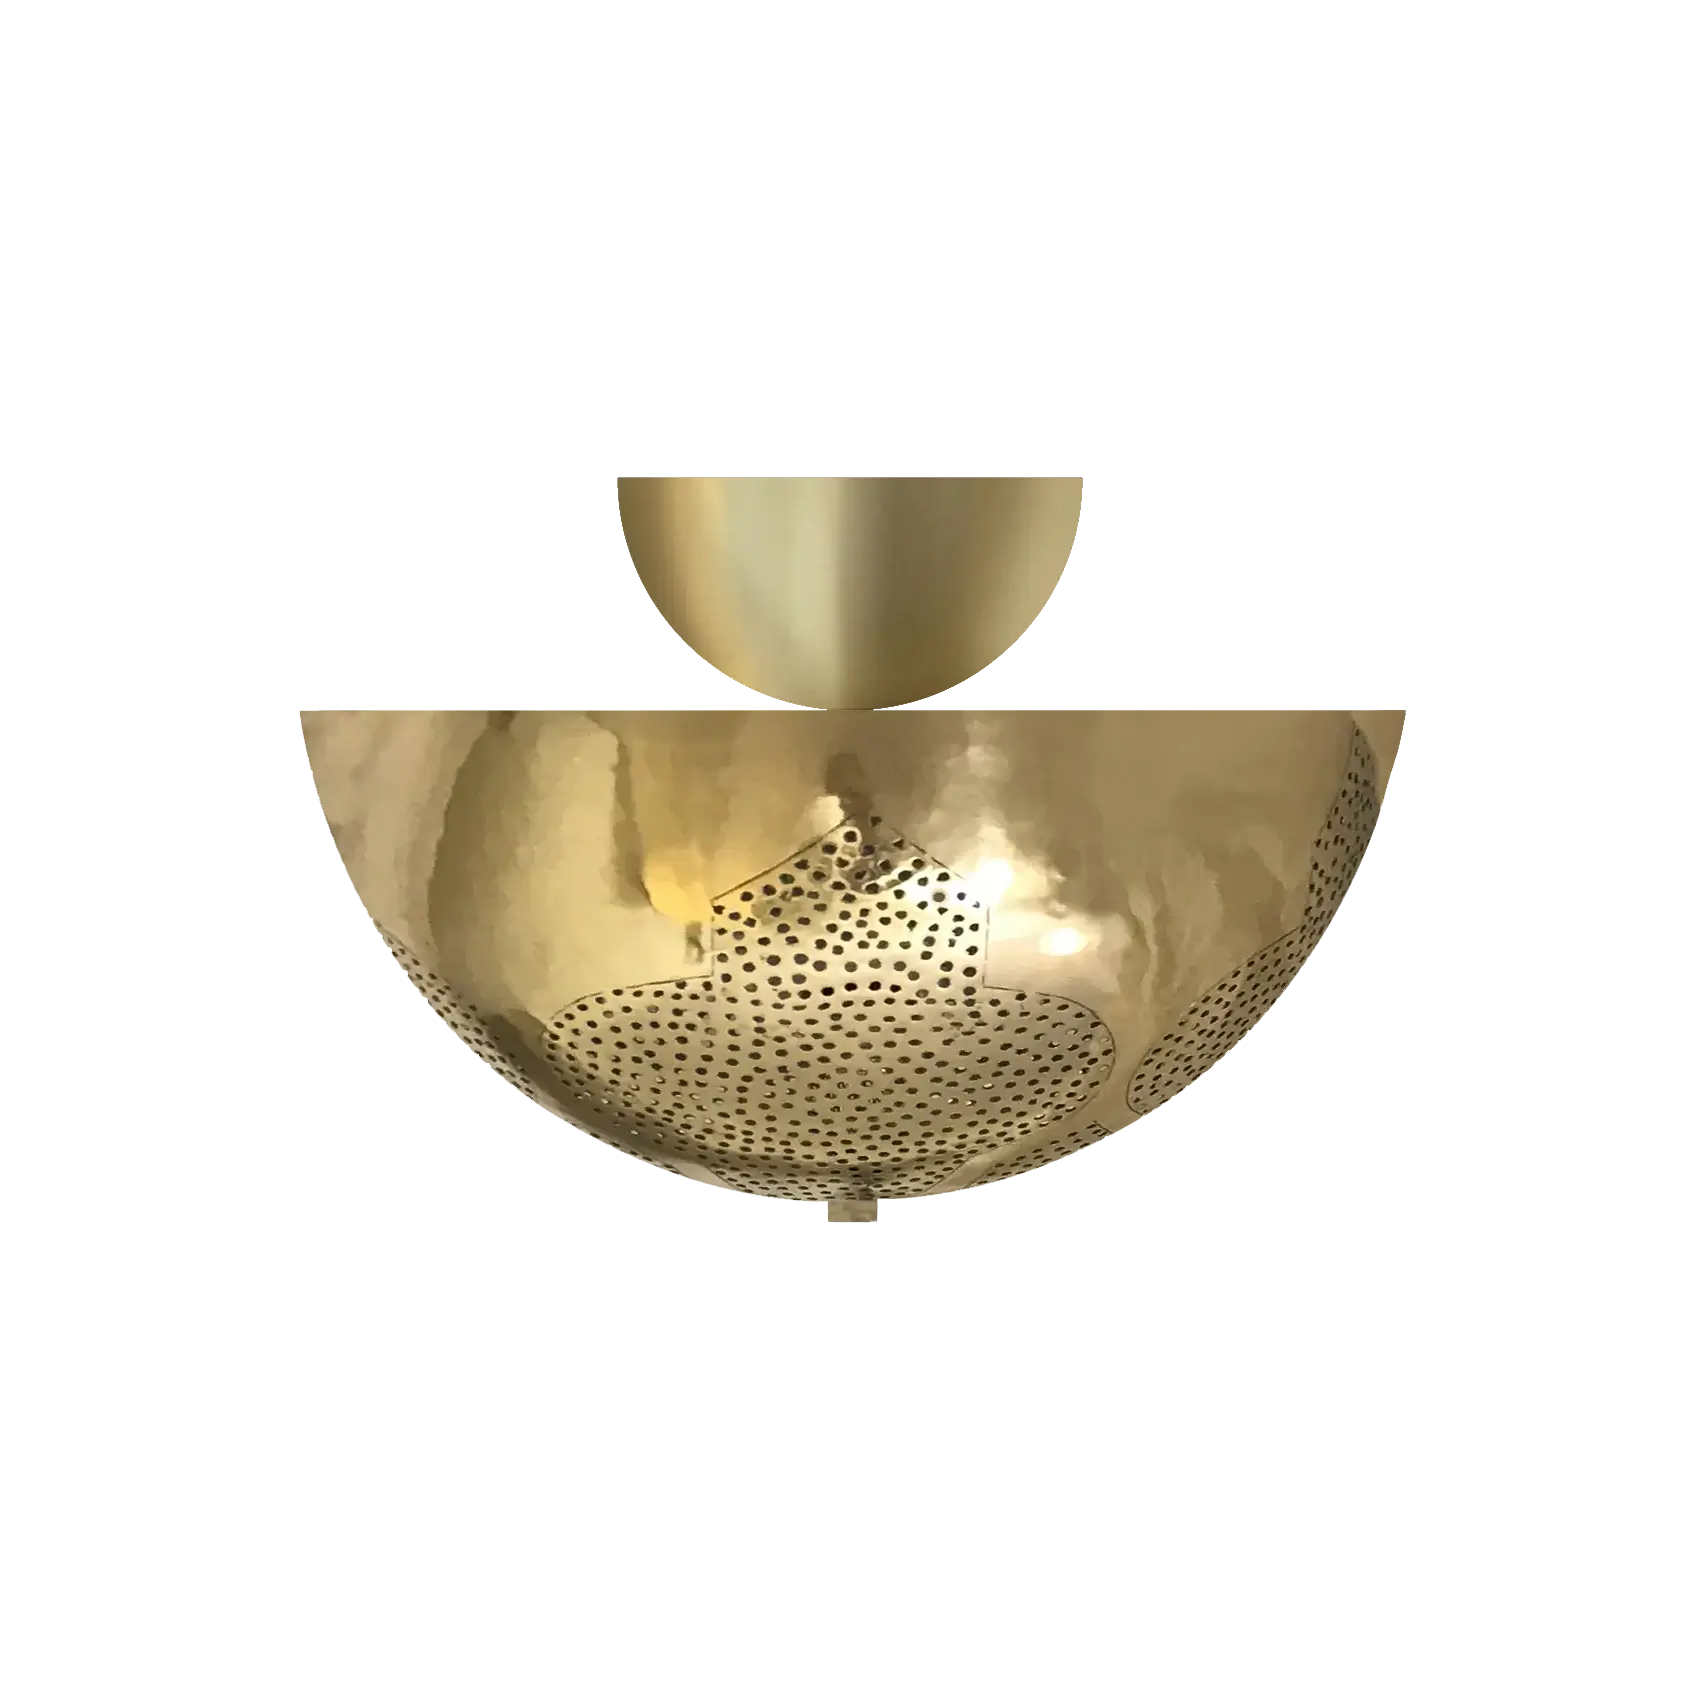 Dounia home Csemi-flush light in polished brass   made of Metal, Model: Najma flush mount